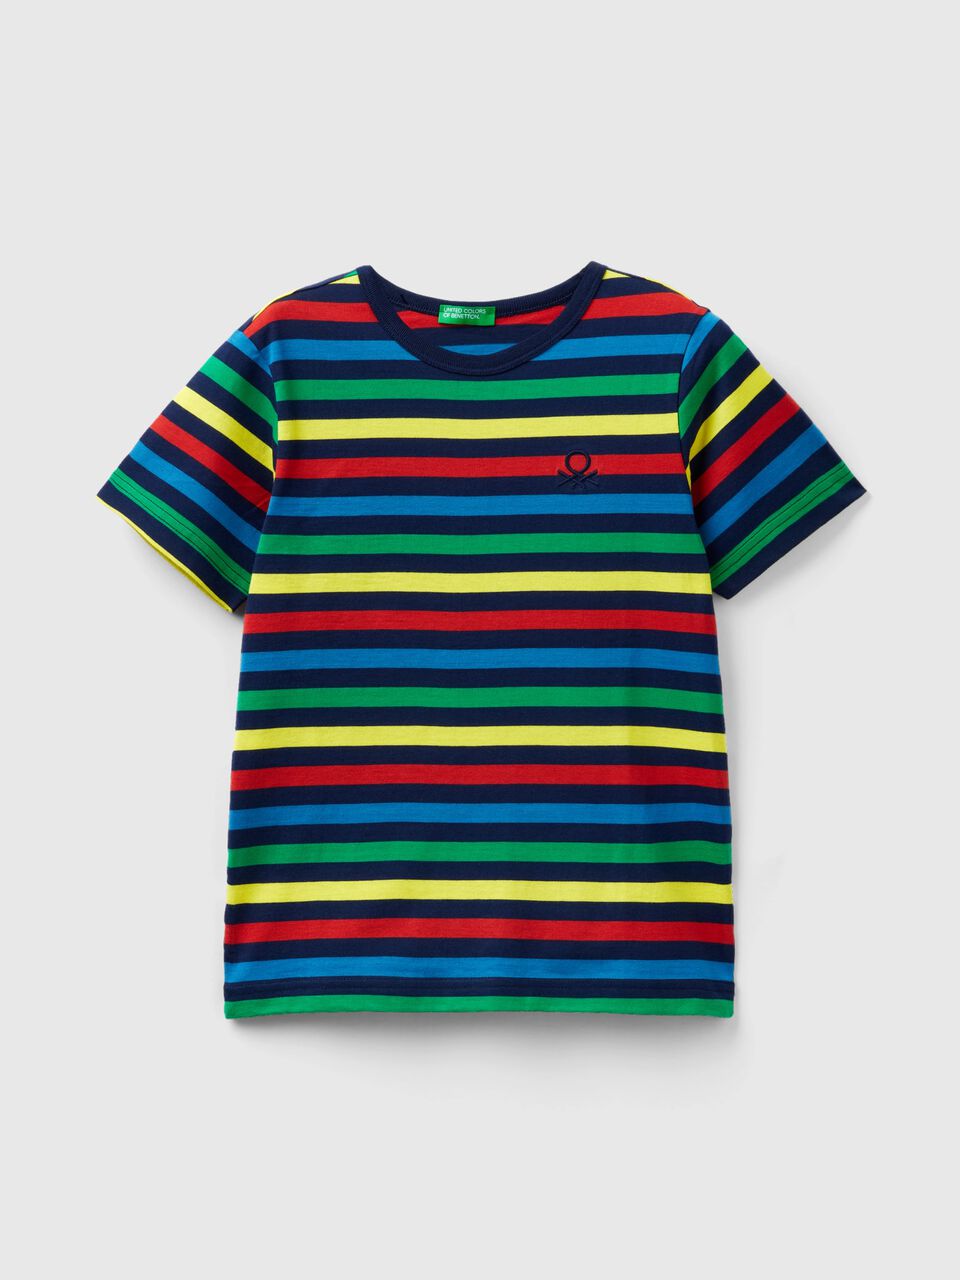 Camiseta de Niño cuello redondo Nica 32 Rayas Negras